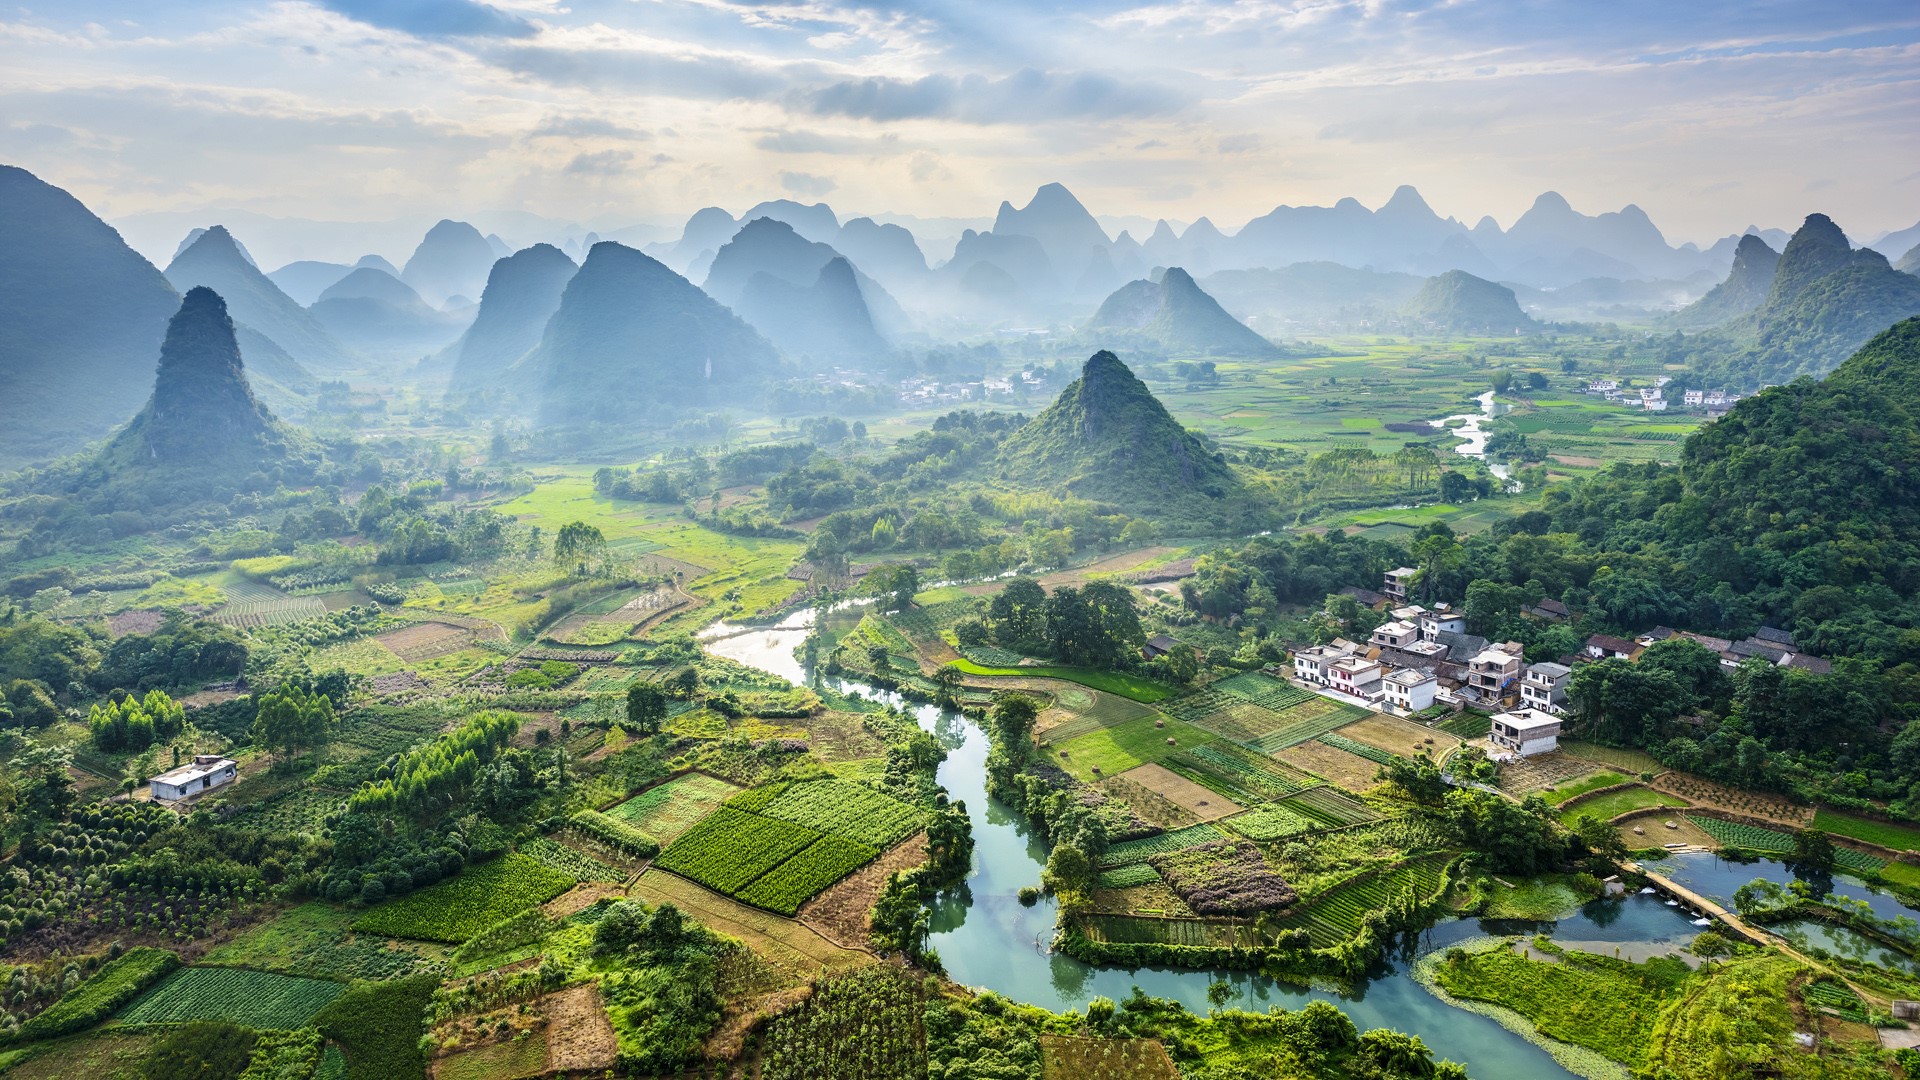 Landscape of Guilin, Li River and Karst mountains, Yangshuo, Guangxi, China. Windows 10 Spotlight Image